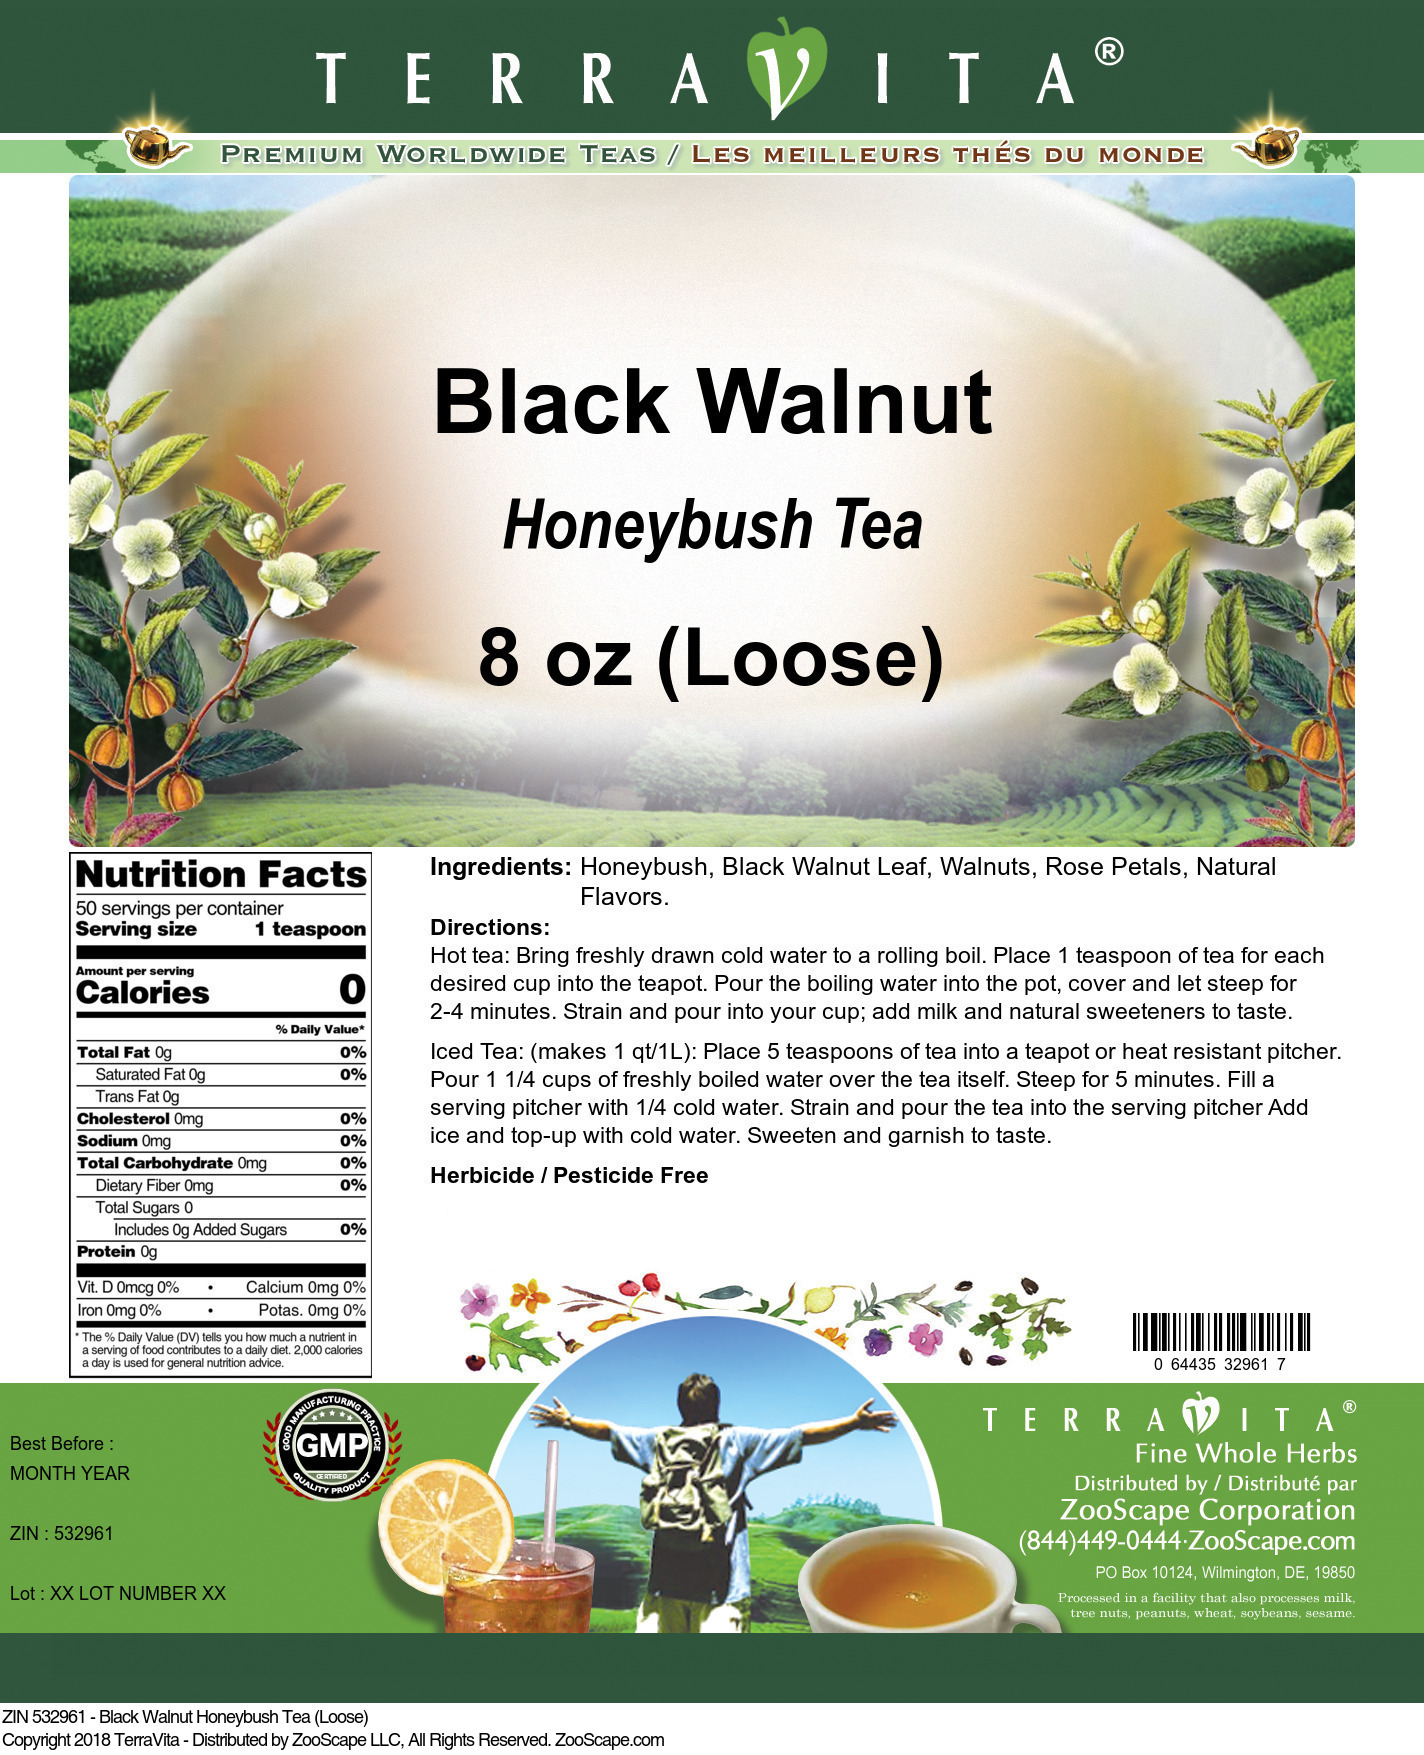 Black Walnut Honeybush Tea (Loose) - Label